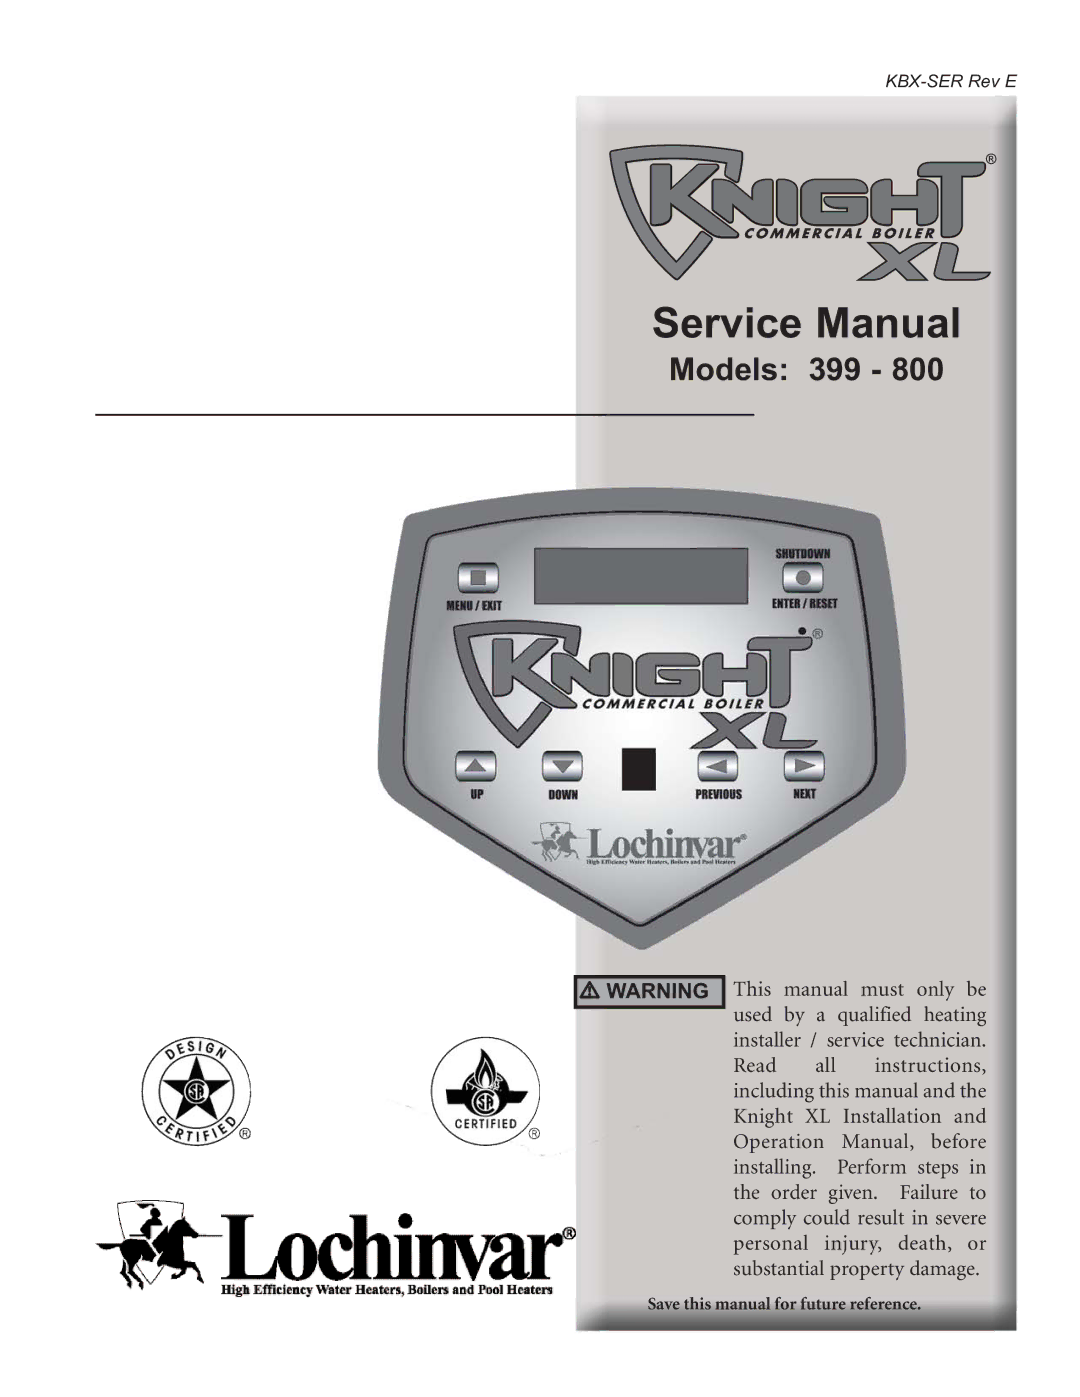 Lochinvar 399 - 800 service manual Models 399 